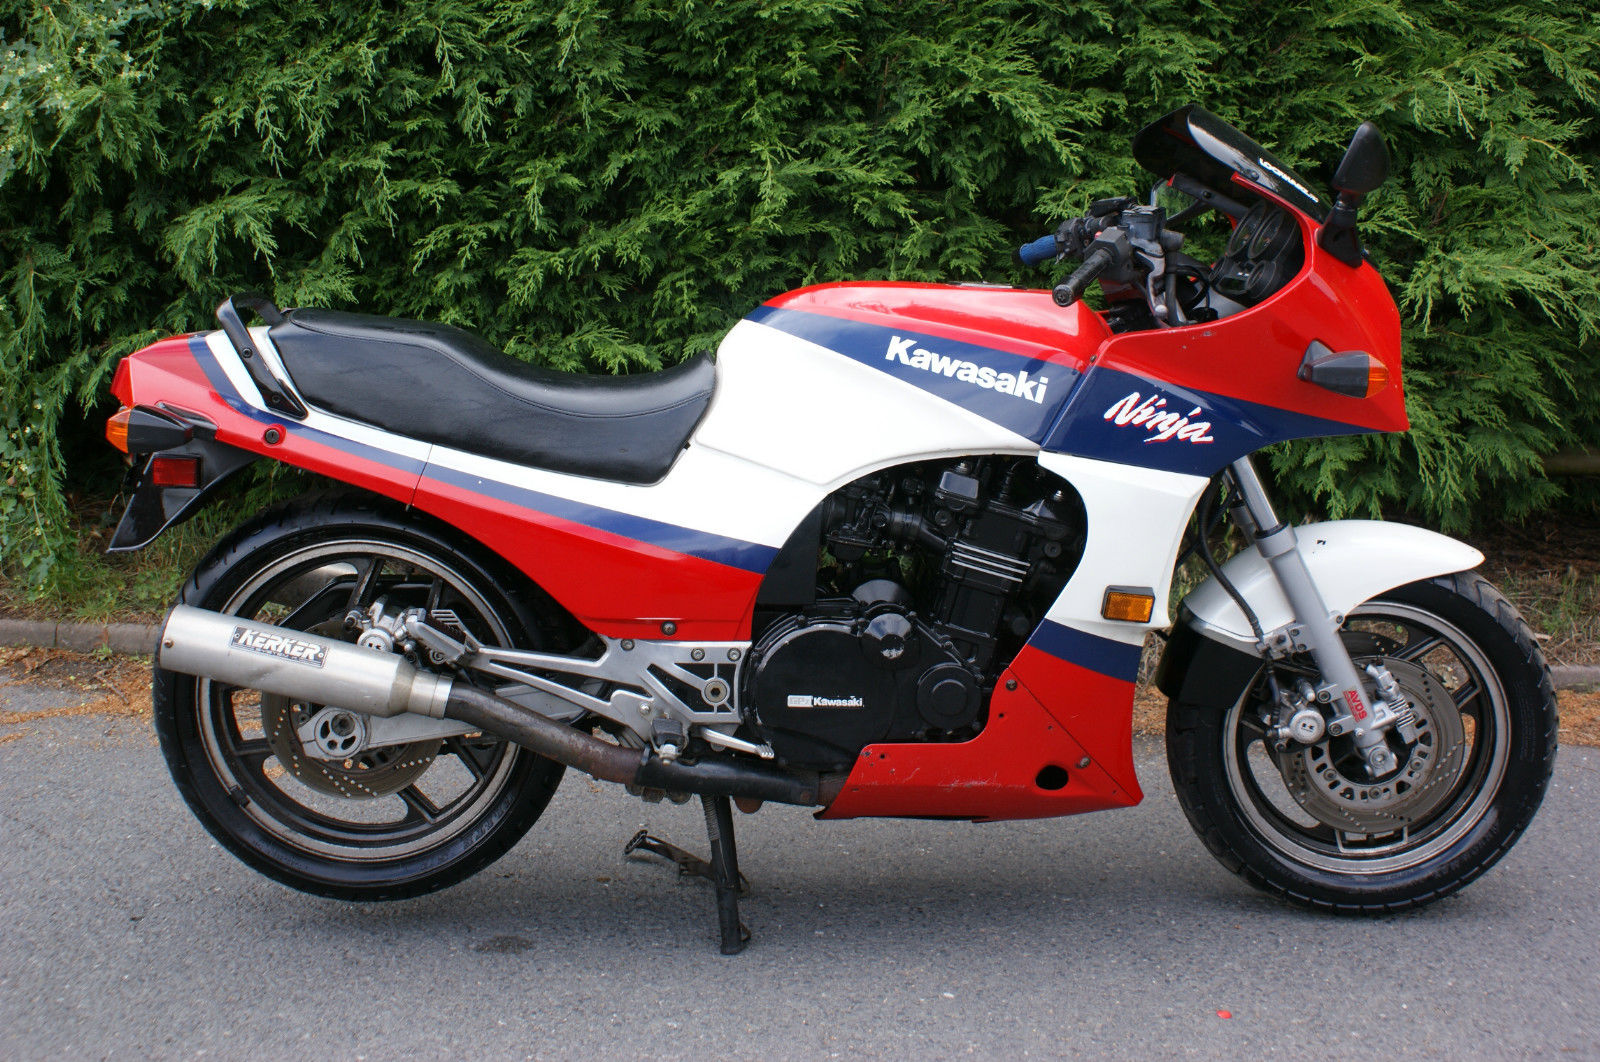 Kawasaki GPZ Ninja 1986 low miles in amazing & original condition